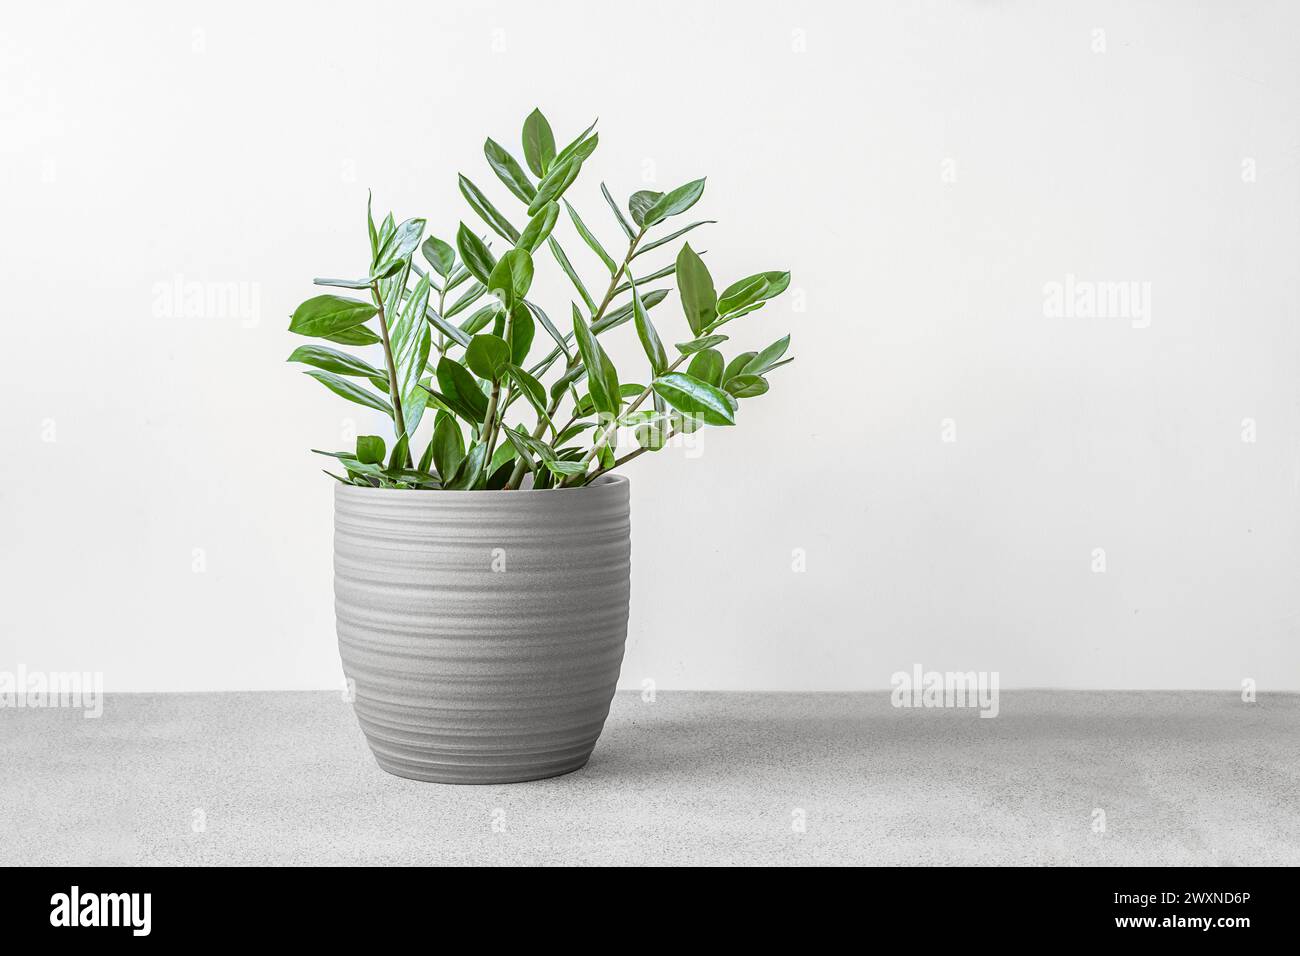 Zamioculcas, or zamiifolia zz plant in a gray ceramic pot on a gray table, home gardening and minimal home decor concept Stock Photo